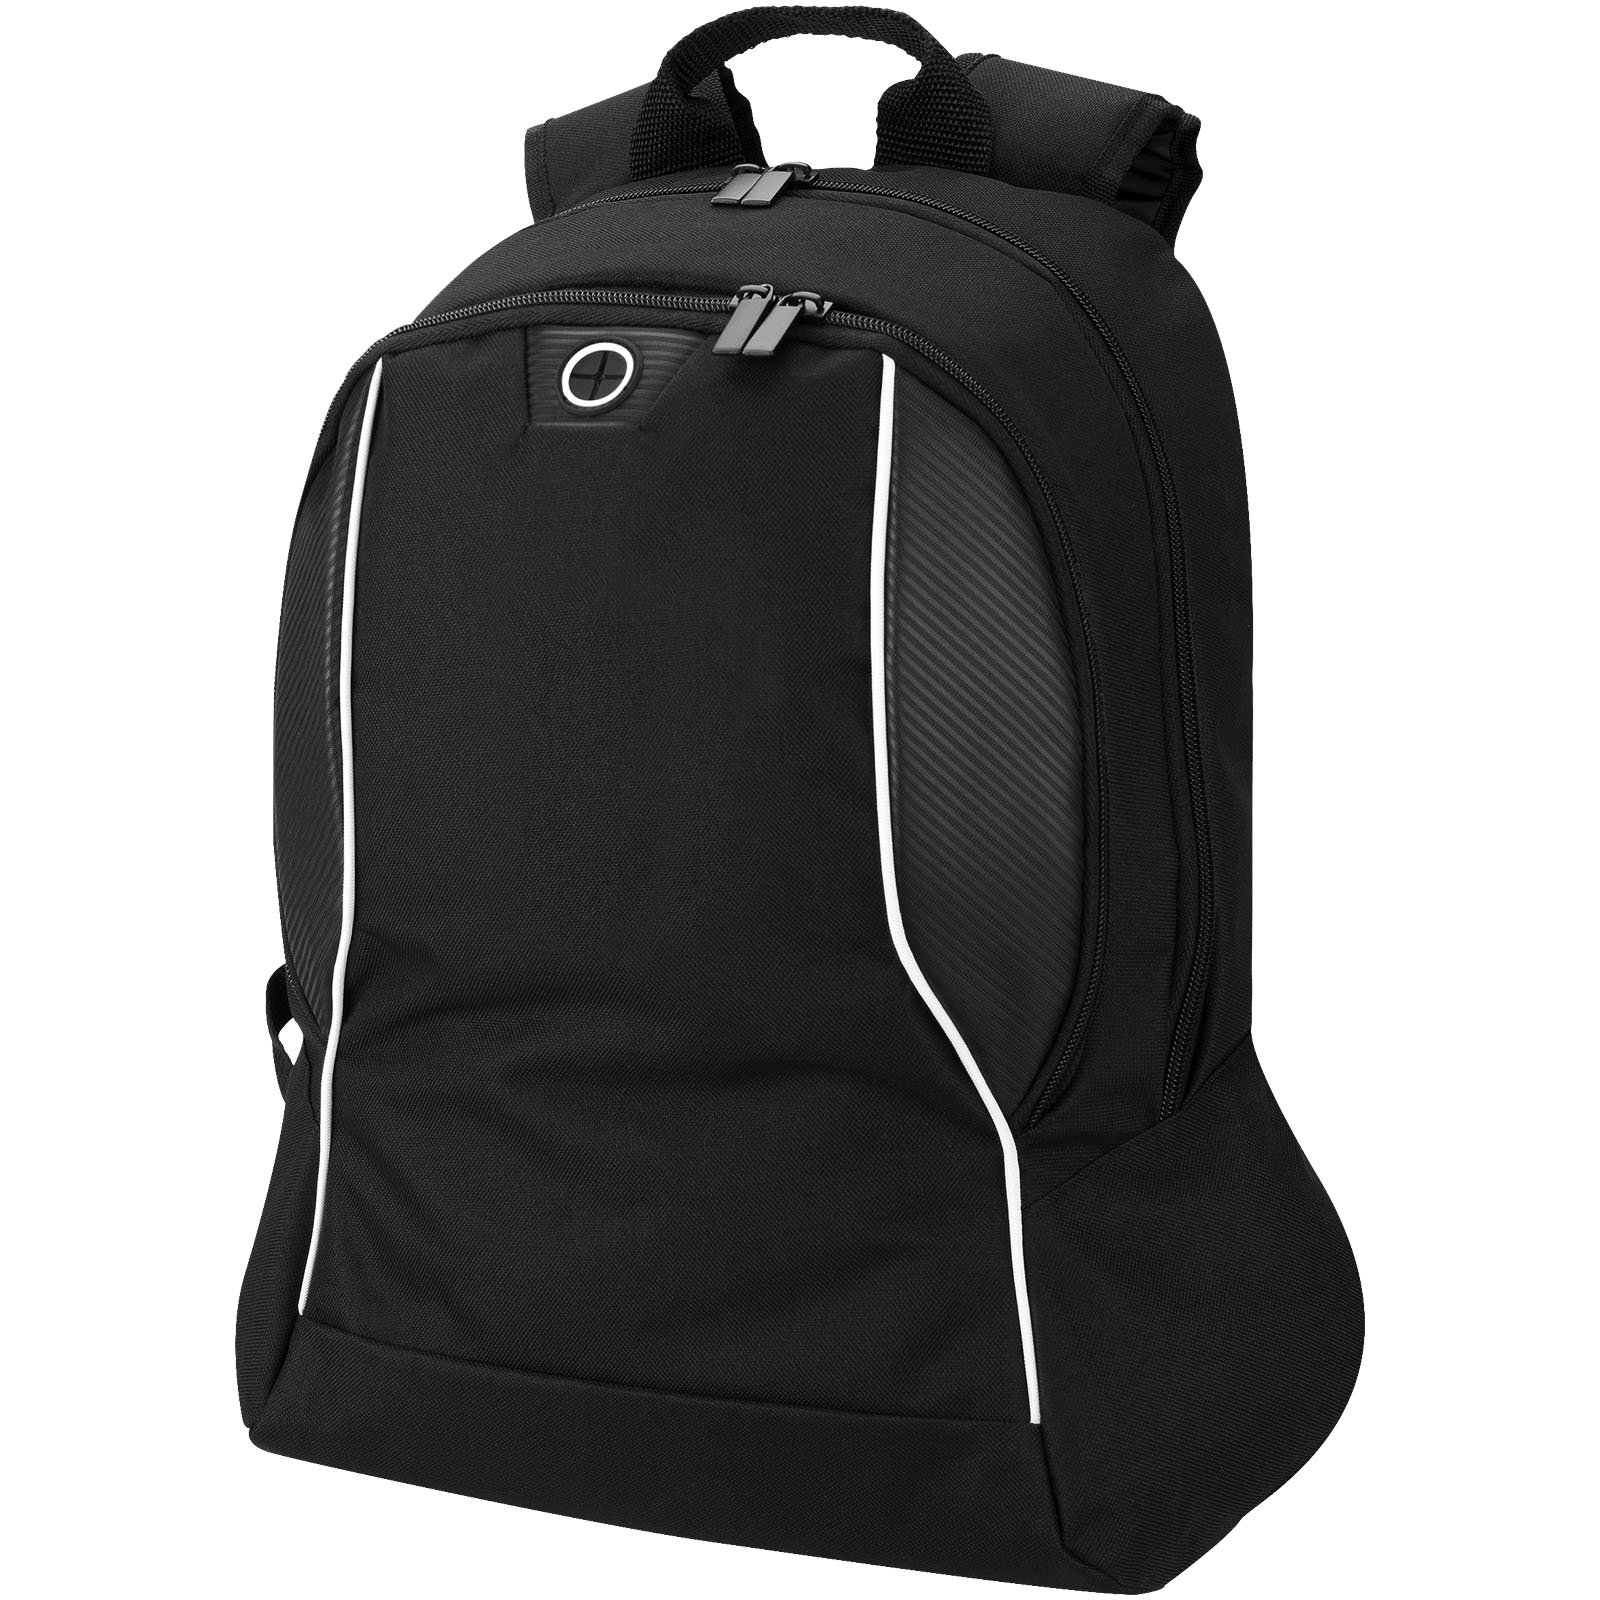 Stark-tech 15.6" Laptop Backpack - Cheddar